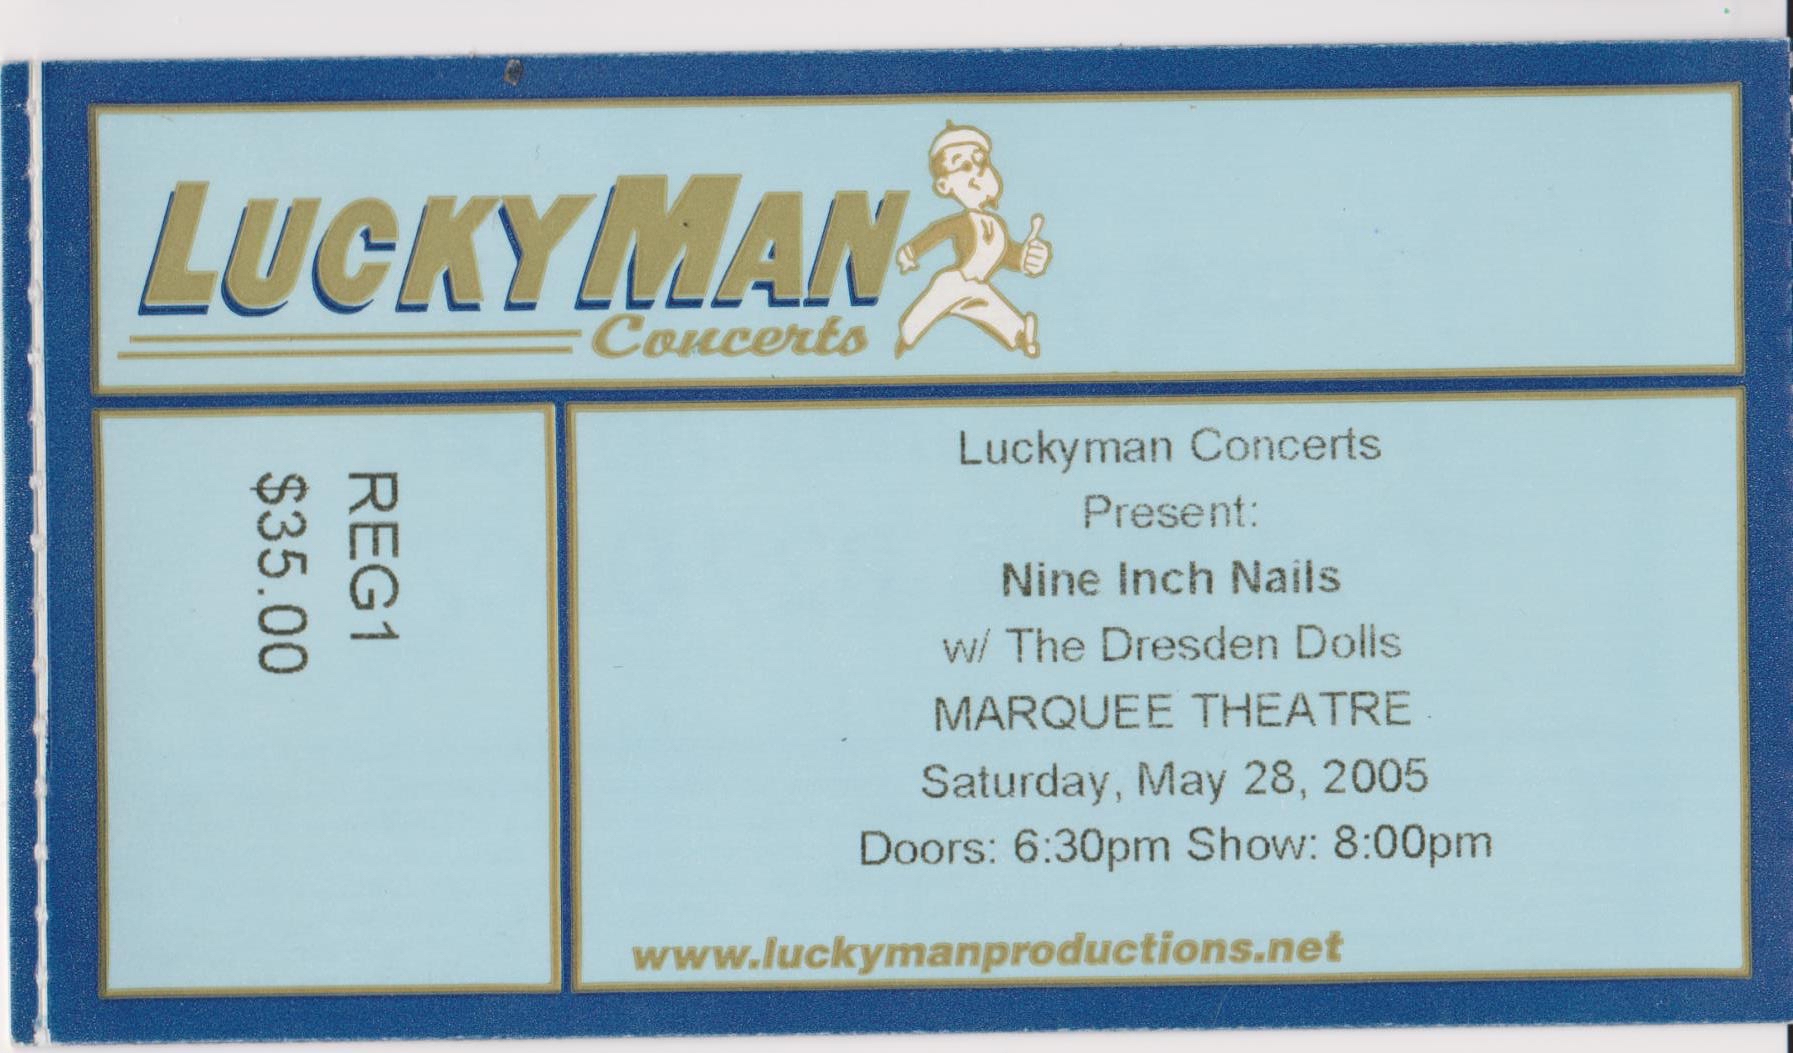 2005/05/28 Ticket